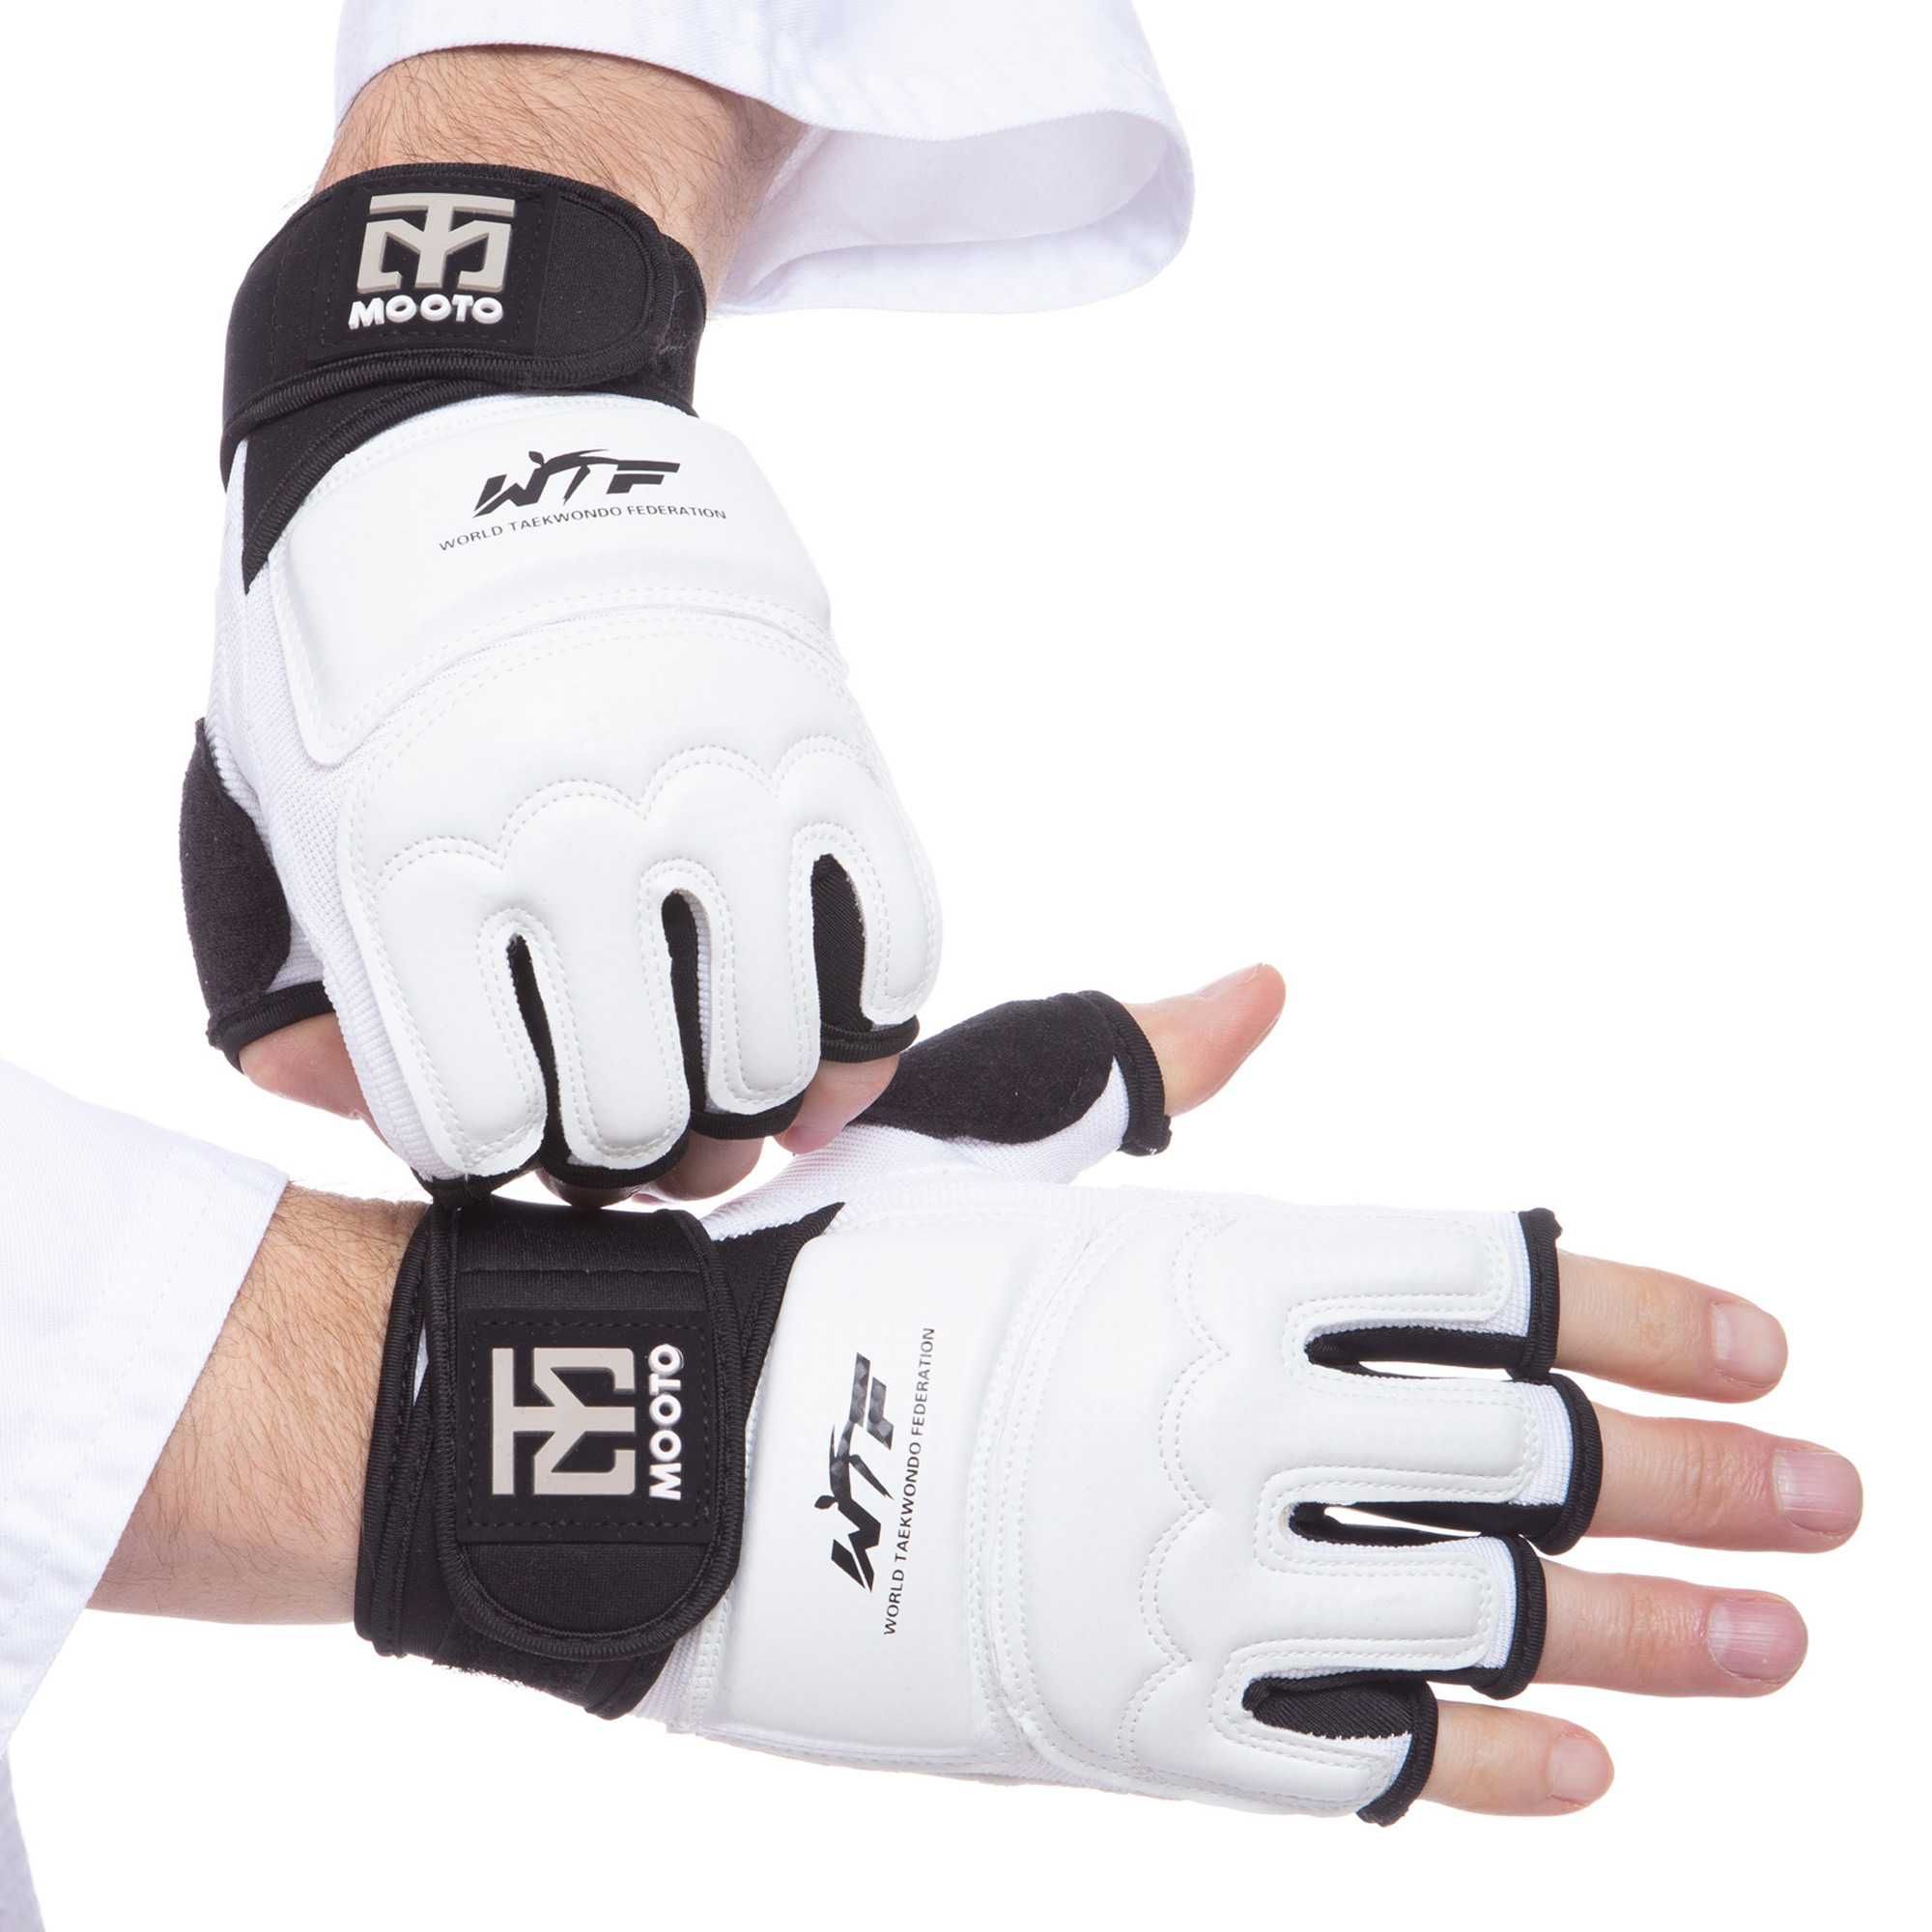 Захист защита рук ніг ног рукавички фути накладки перчатки карате WKF .